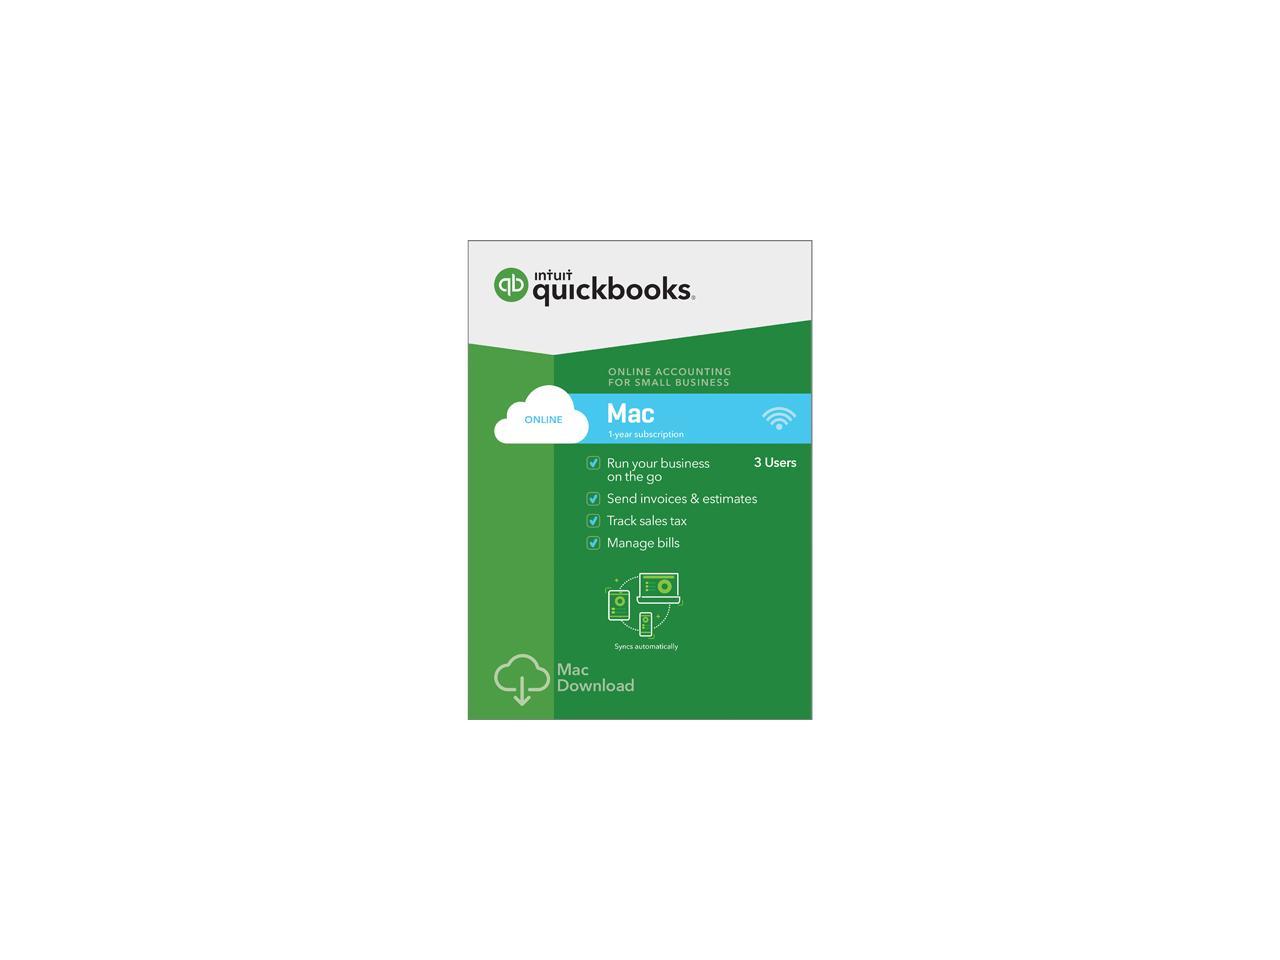 quickbooks 2019 download for mac